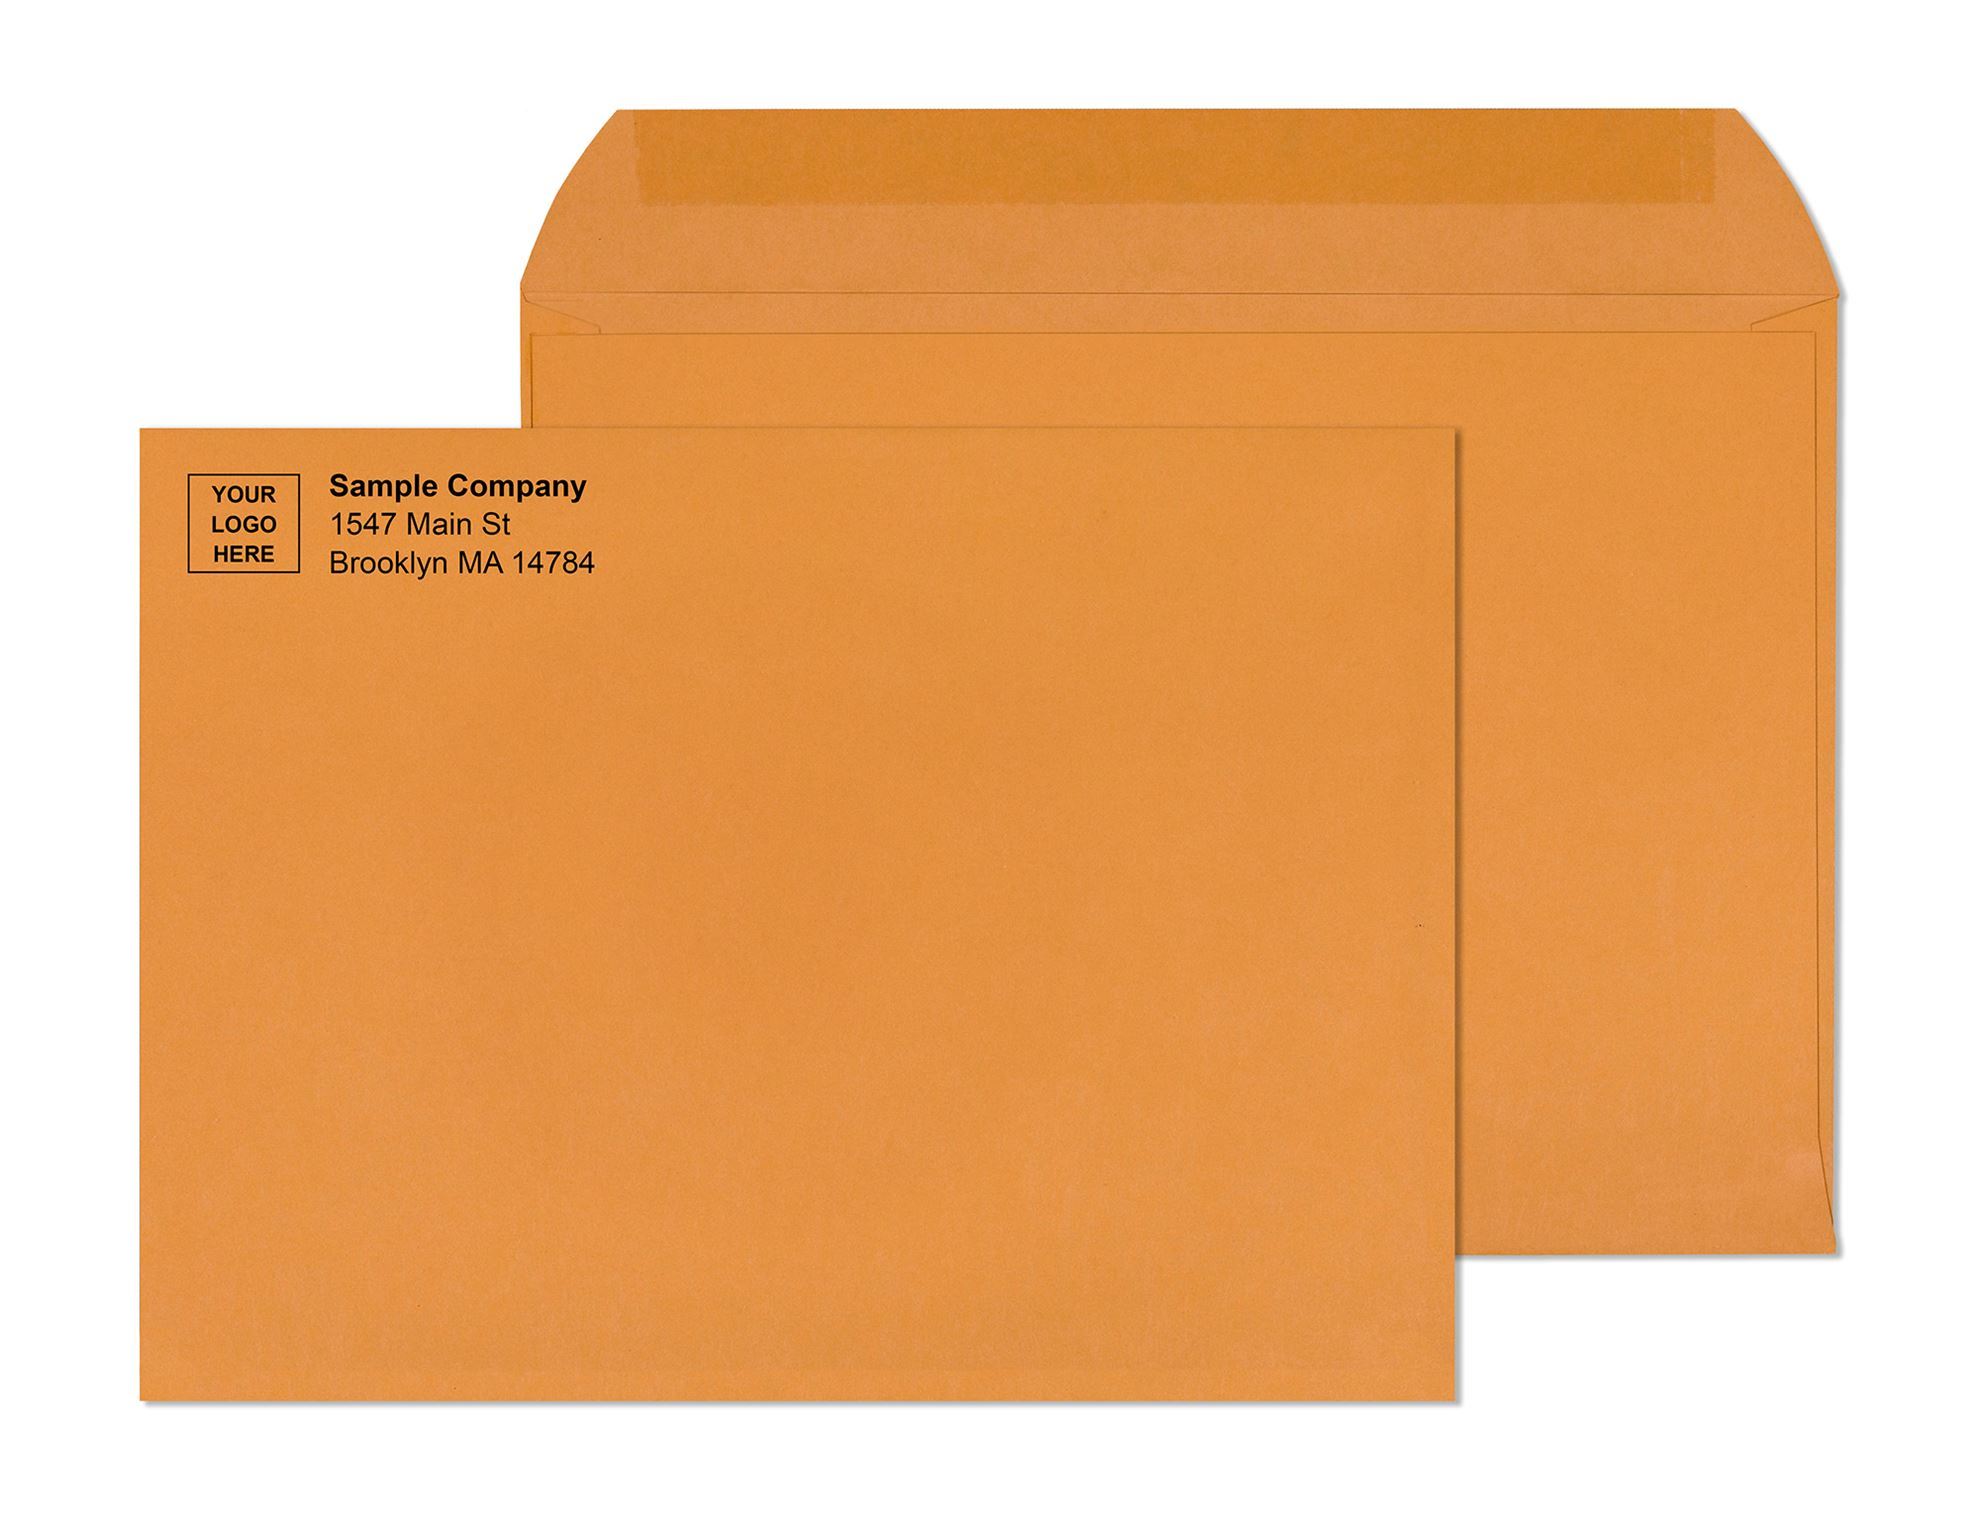 Catalog Envelopes and Booklet Envelope Printing